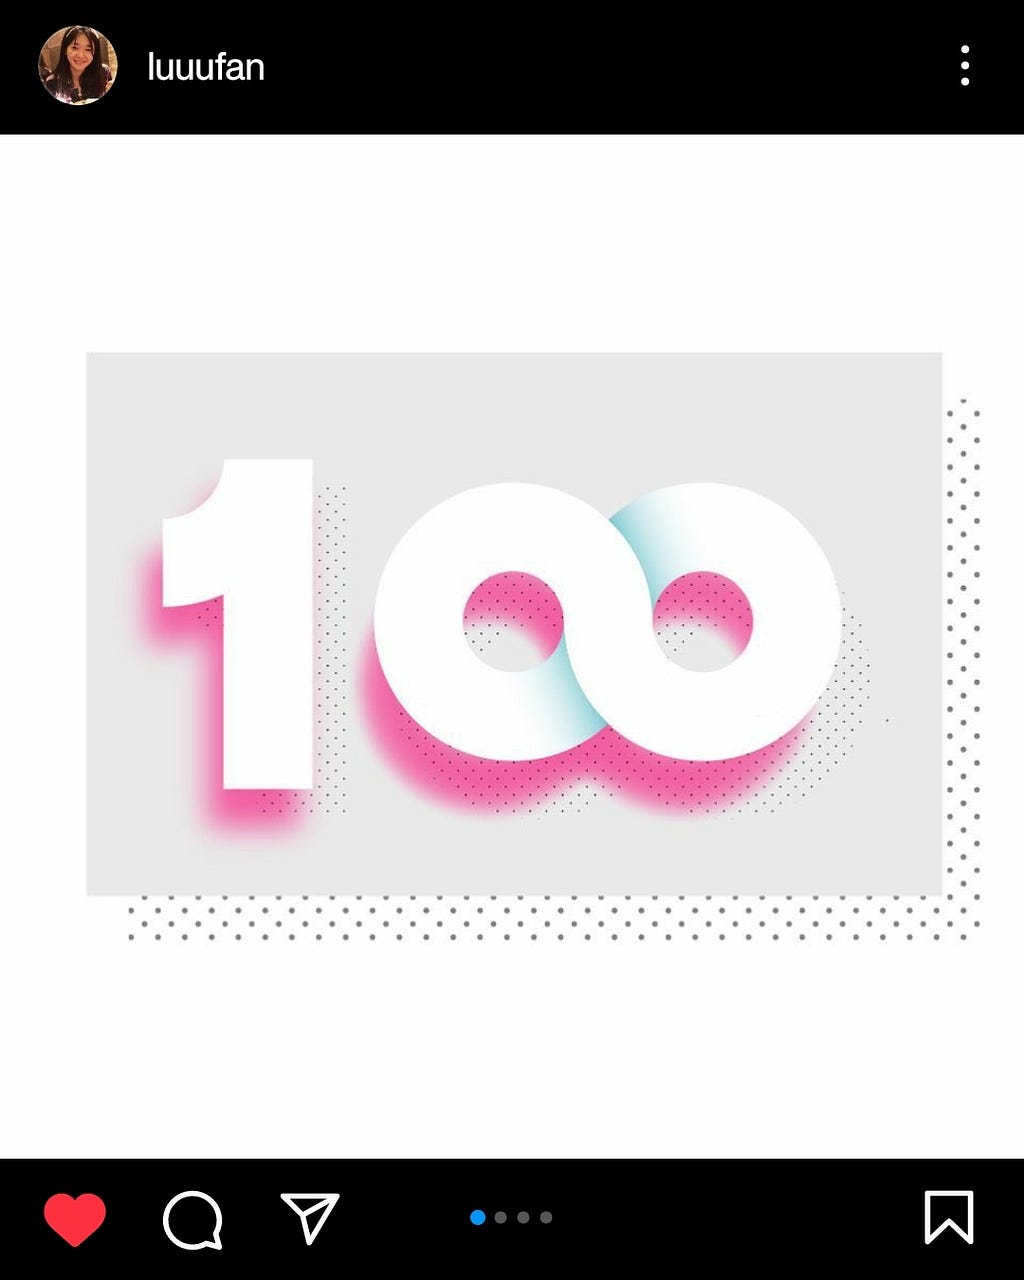 Fan Lu’s 100-day design challenge